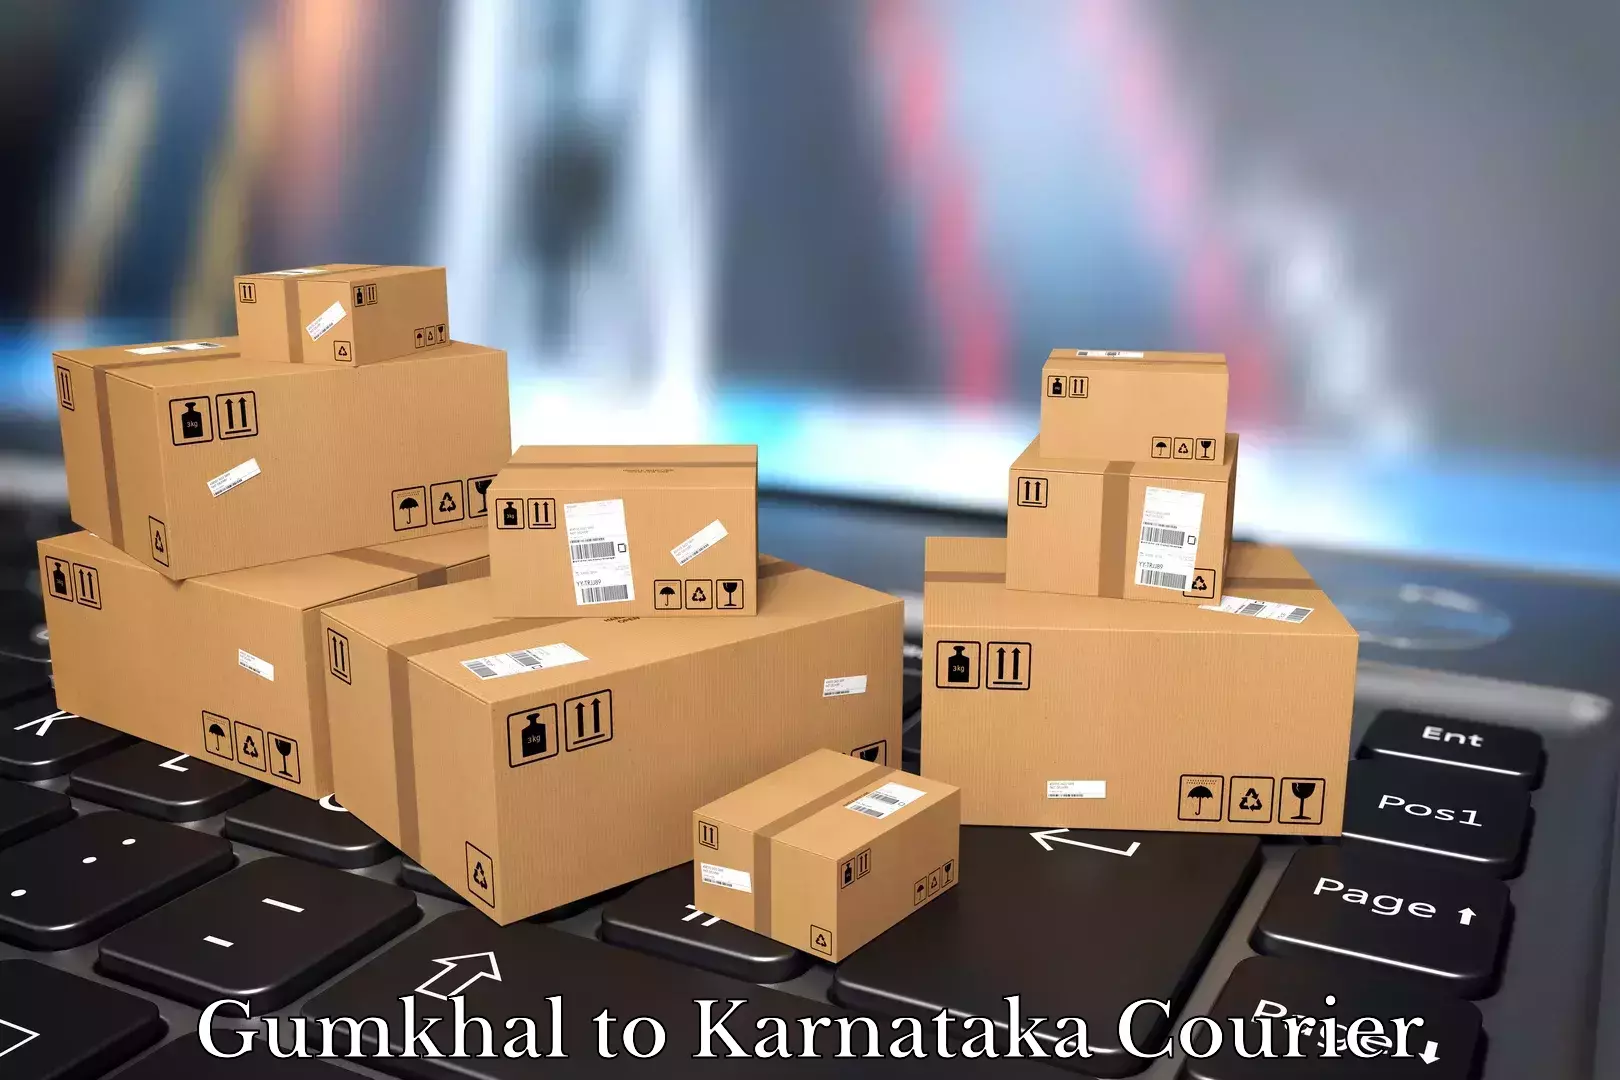 Furniture delivery service Gumkhal to Karnataka